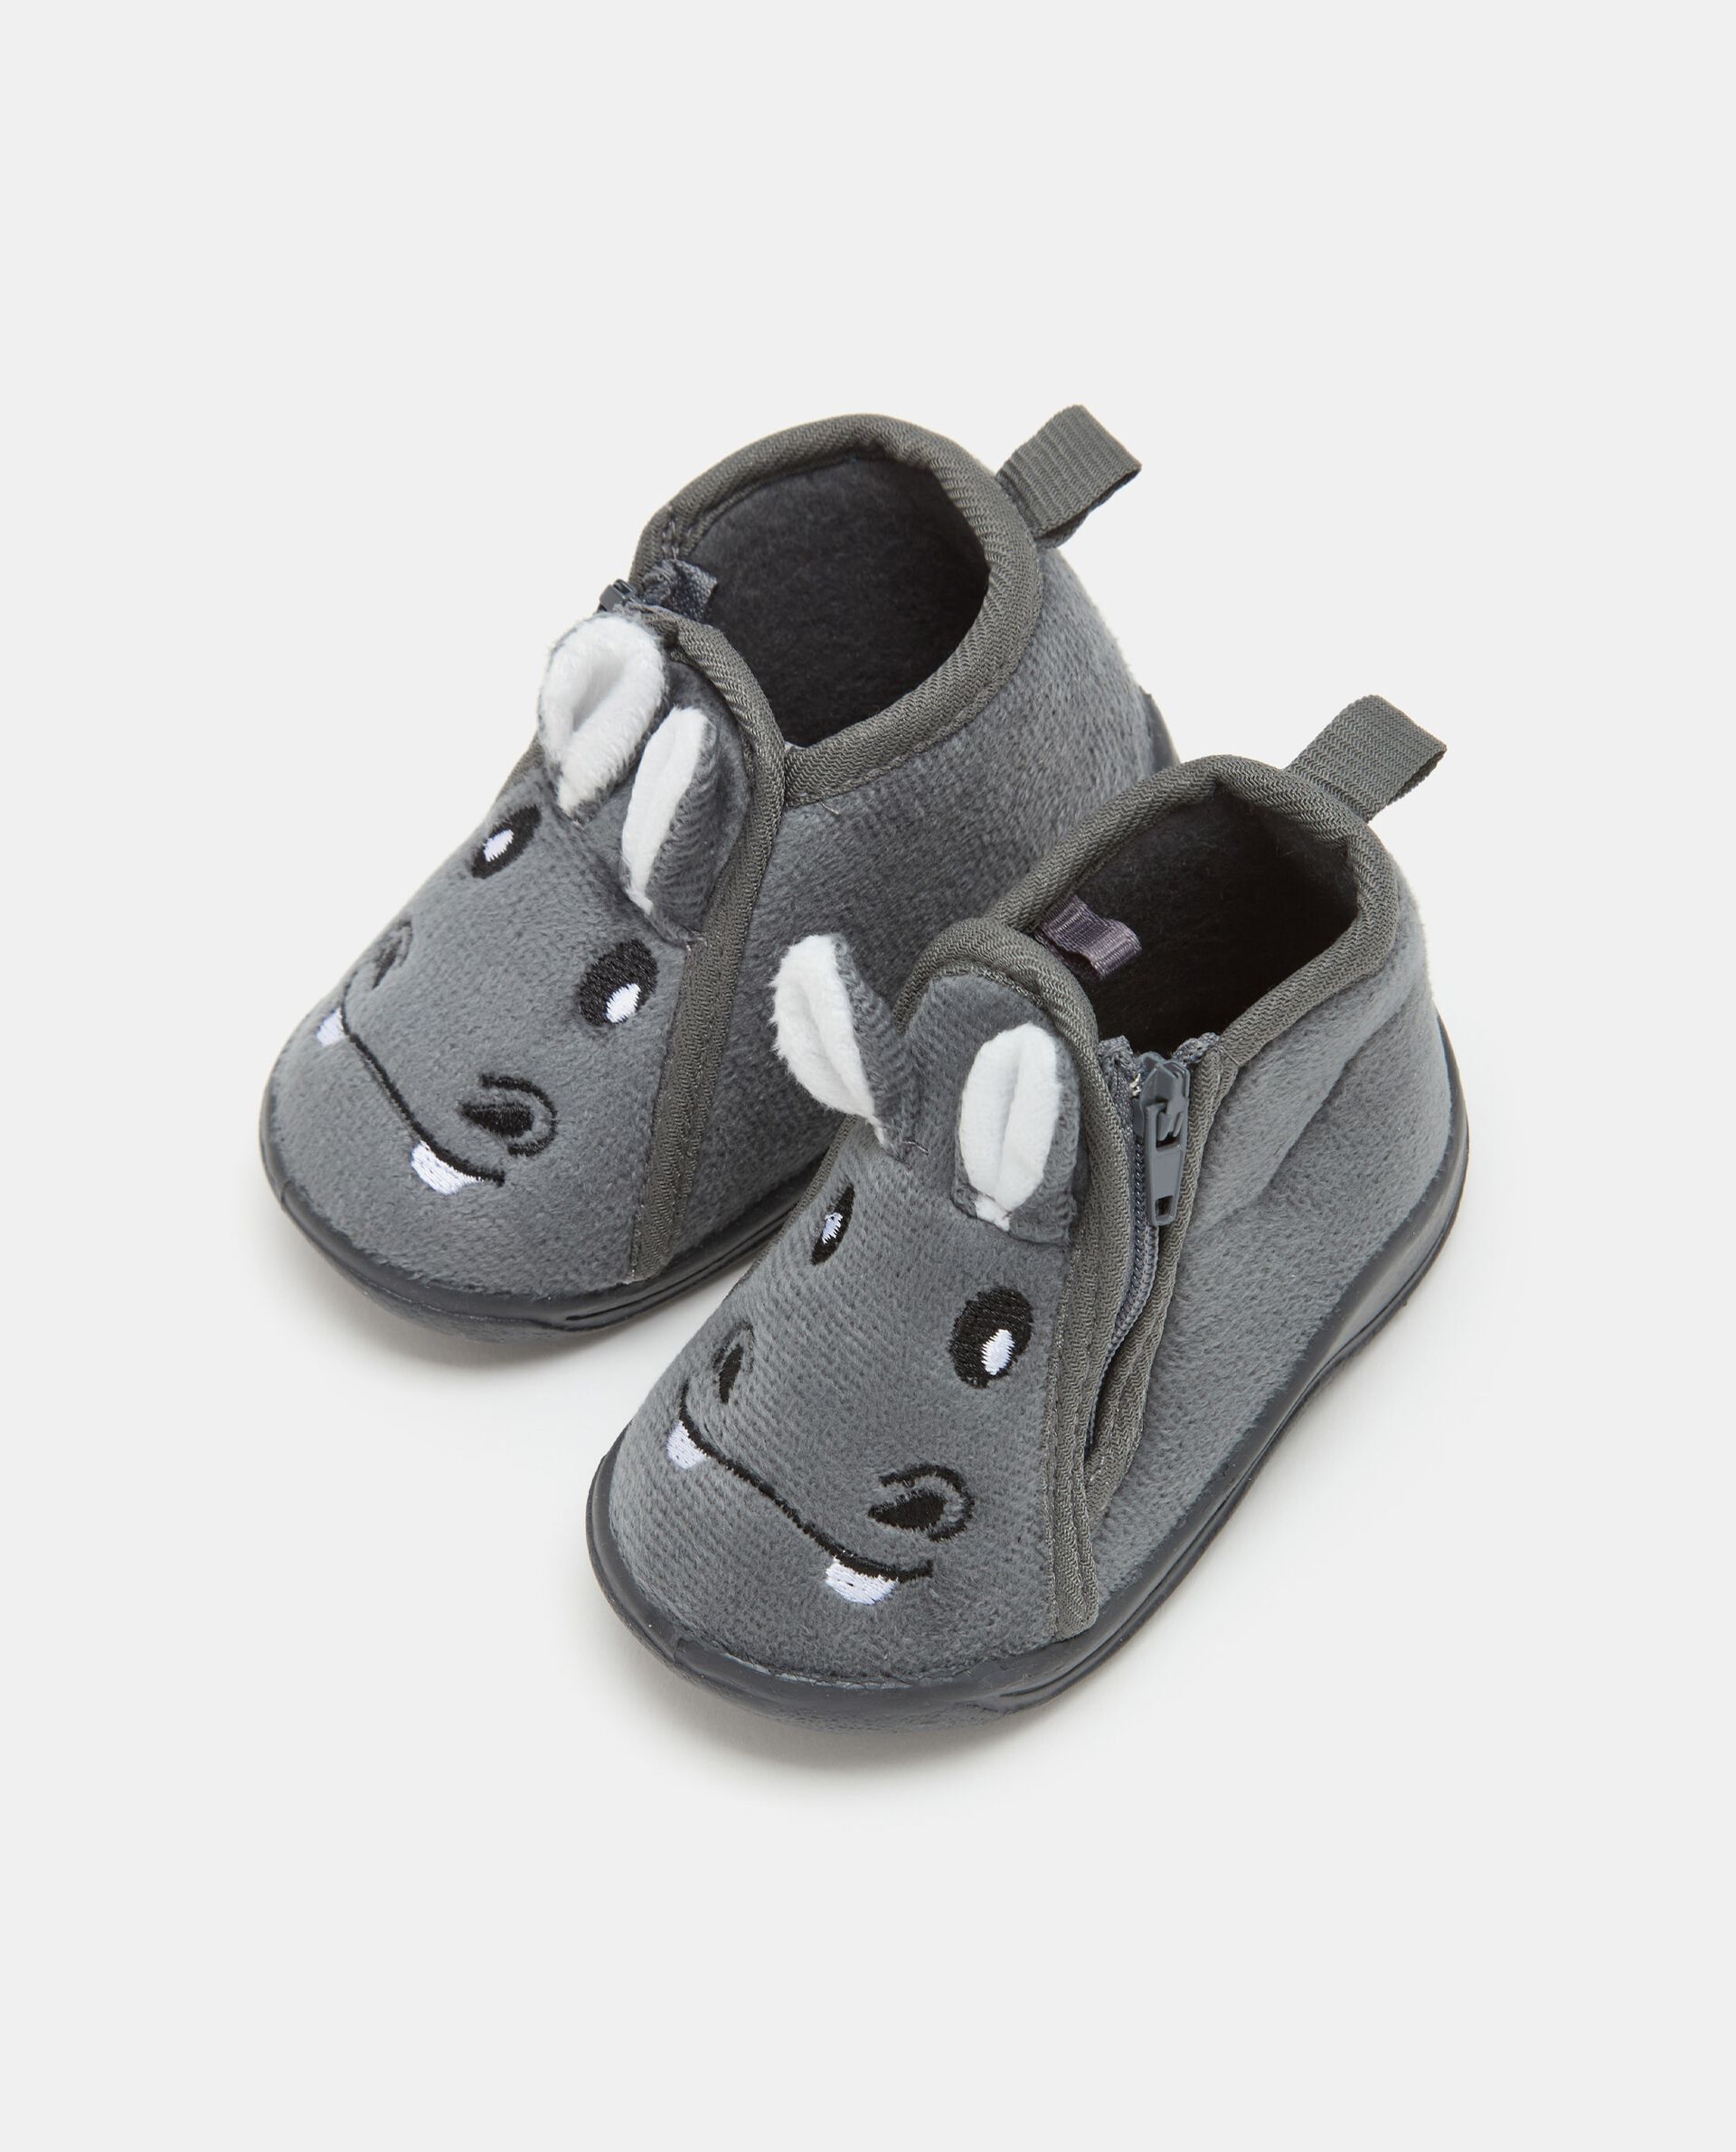 Pantofola con zip neonato